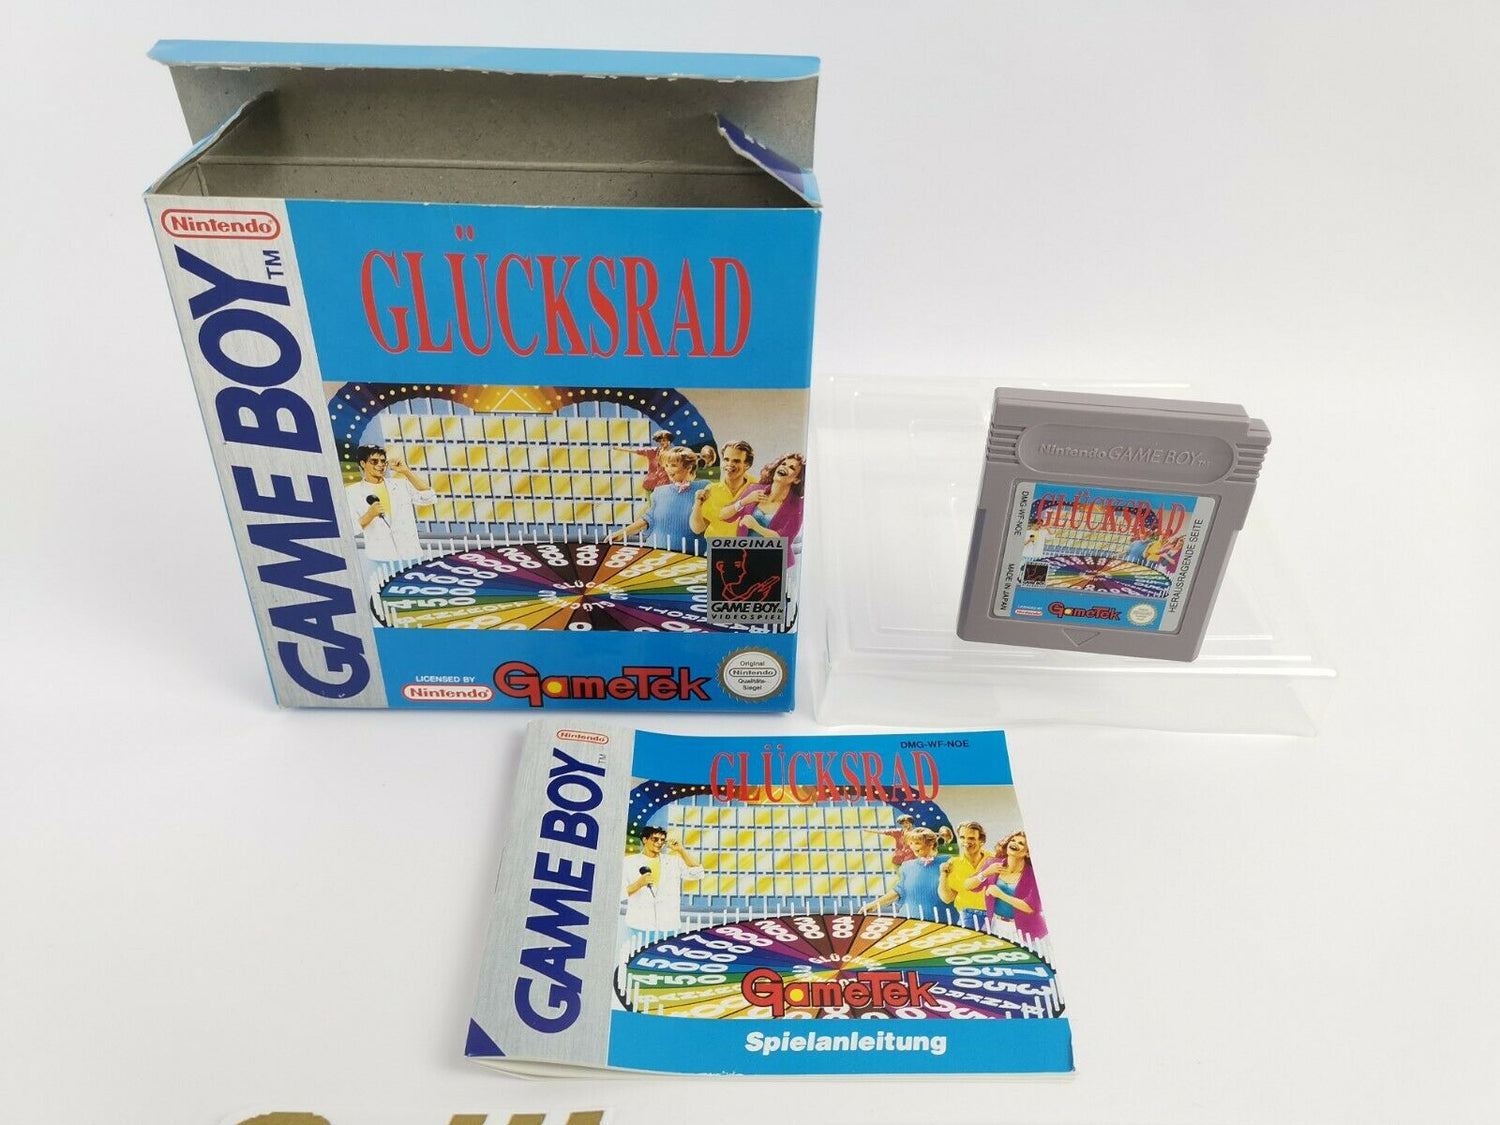 Nintendo Gameboy Classic 